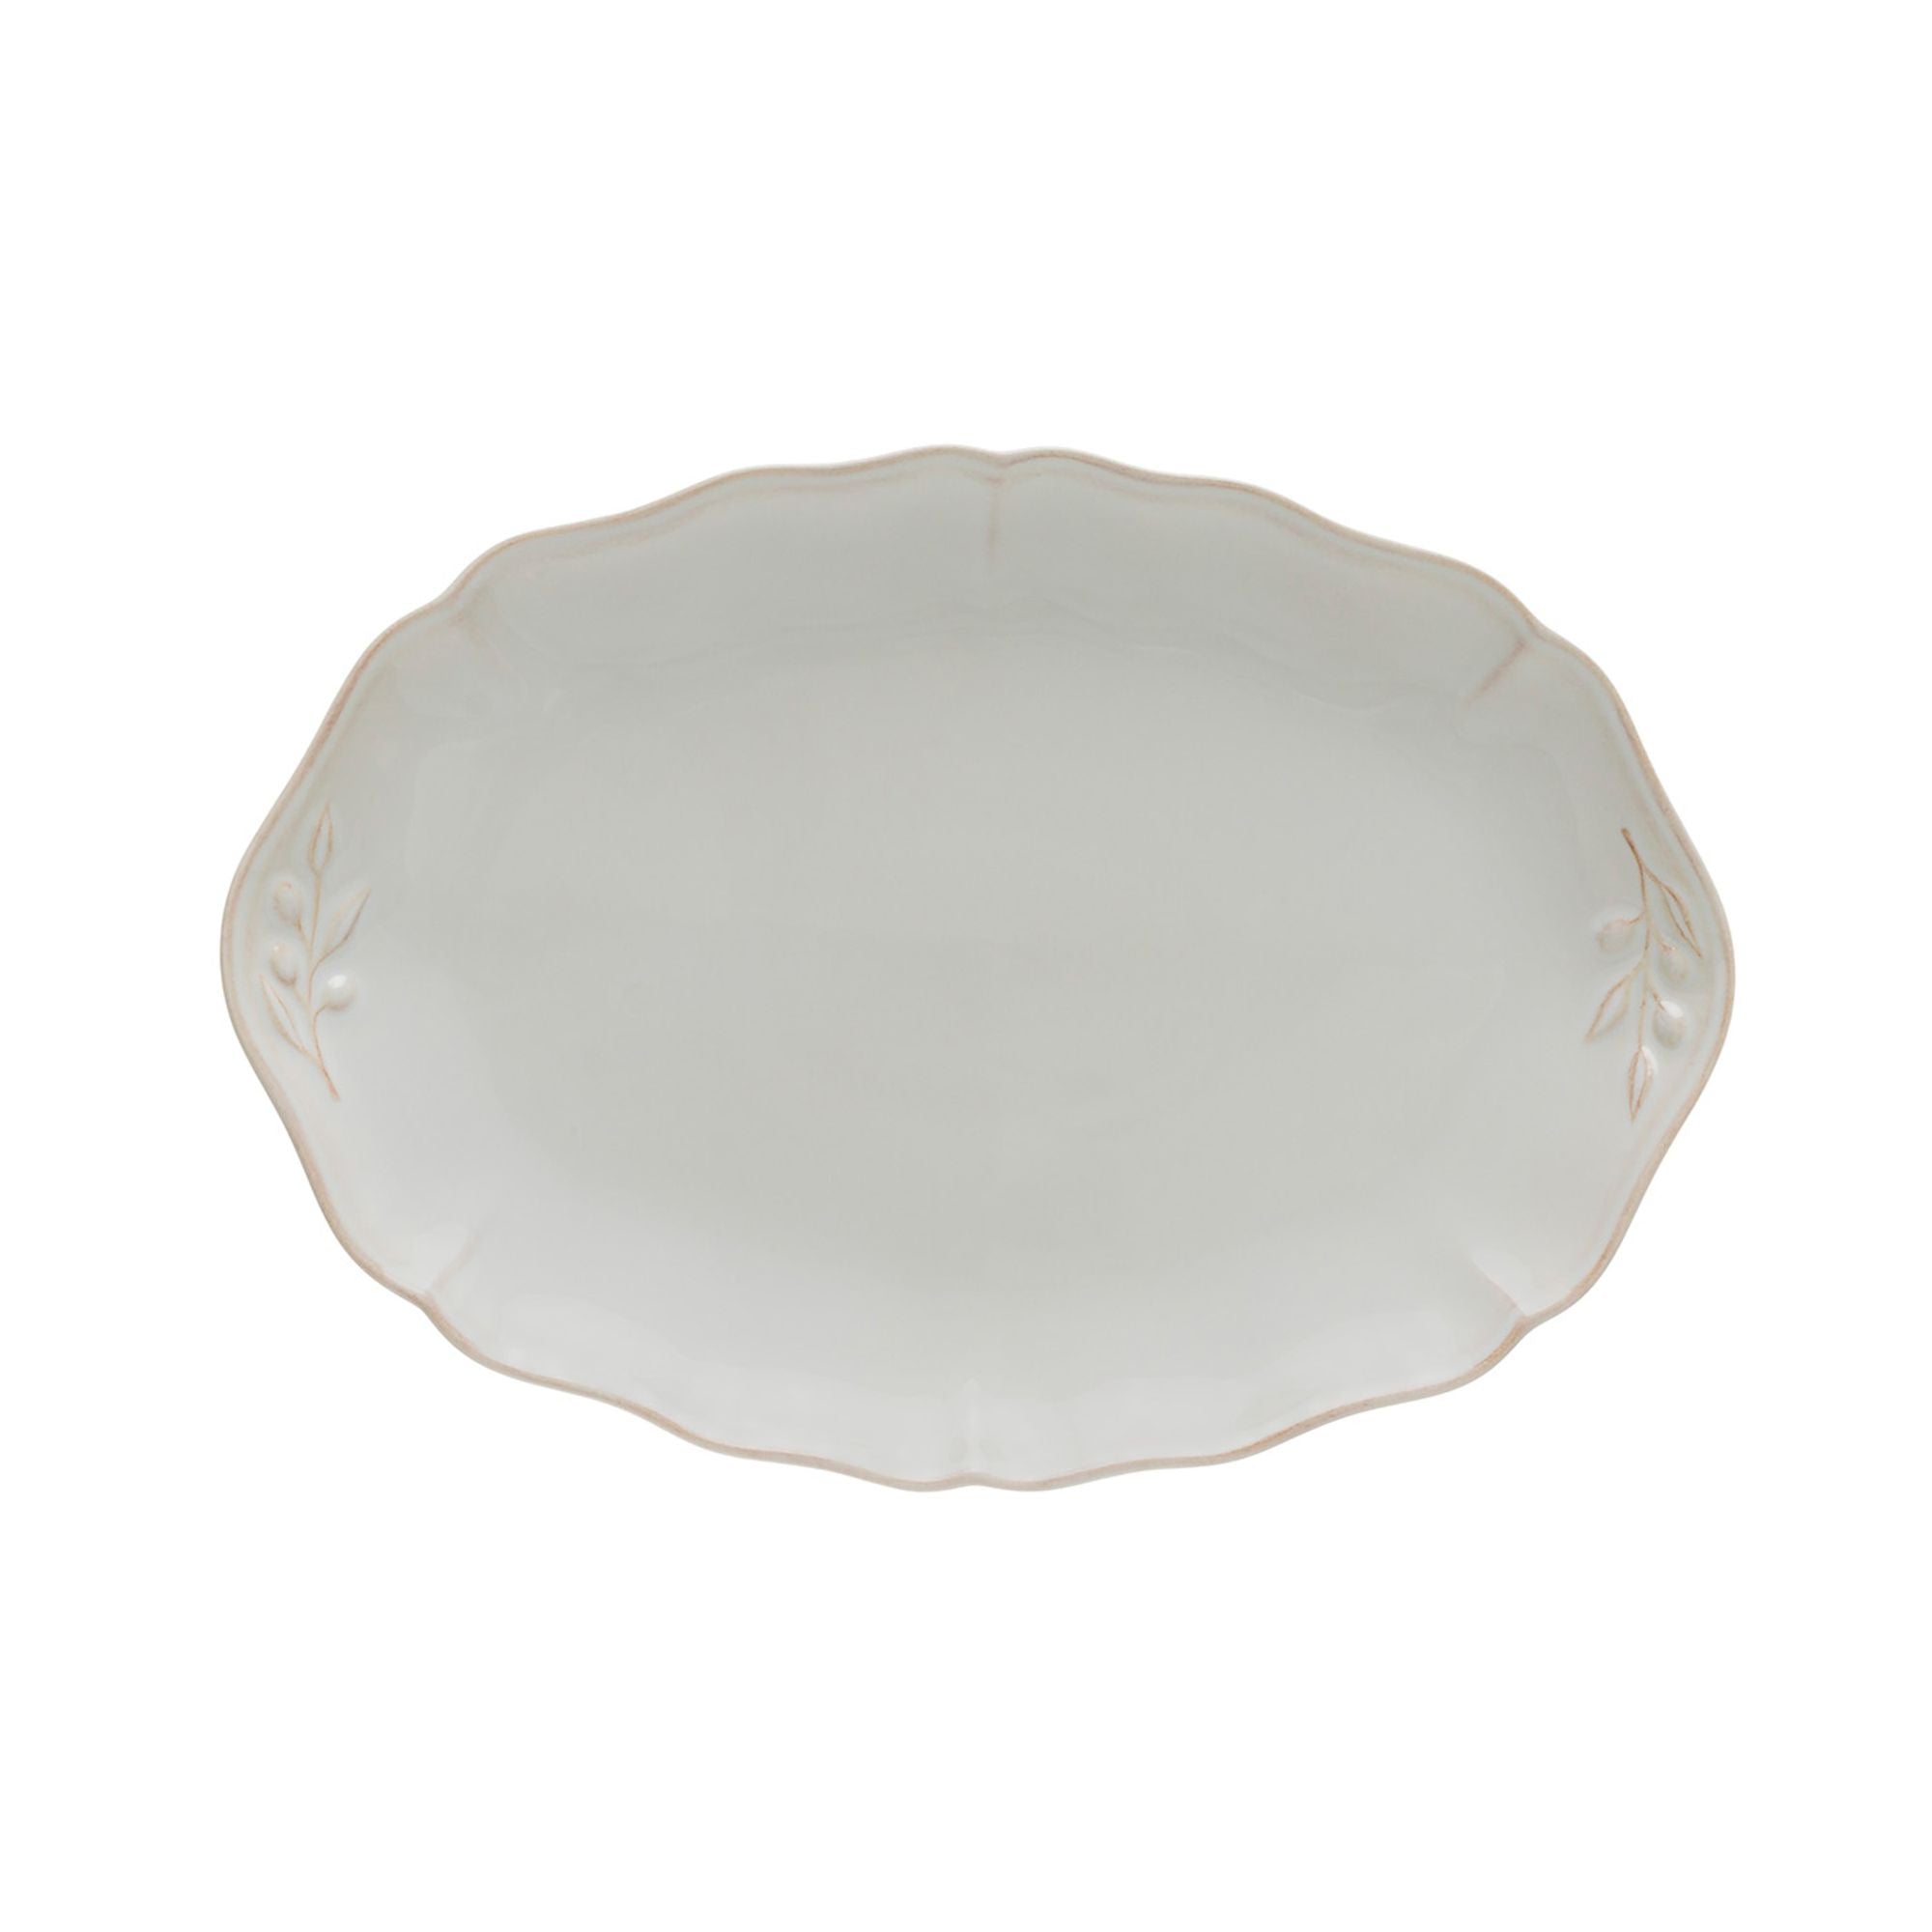 Alentejo Oval Platter 13" White